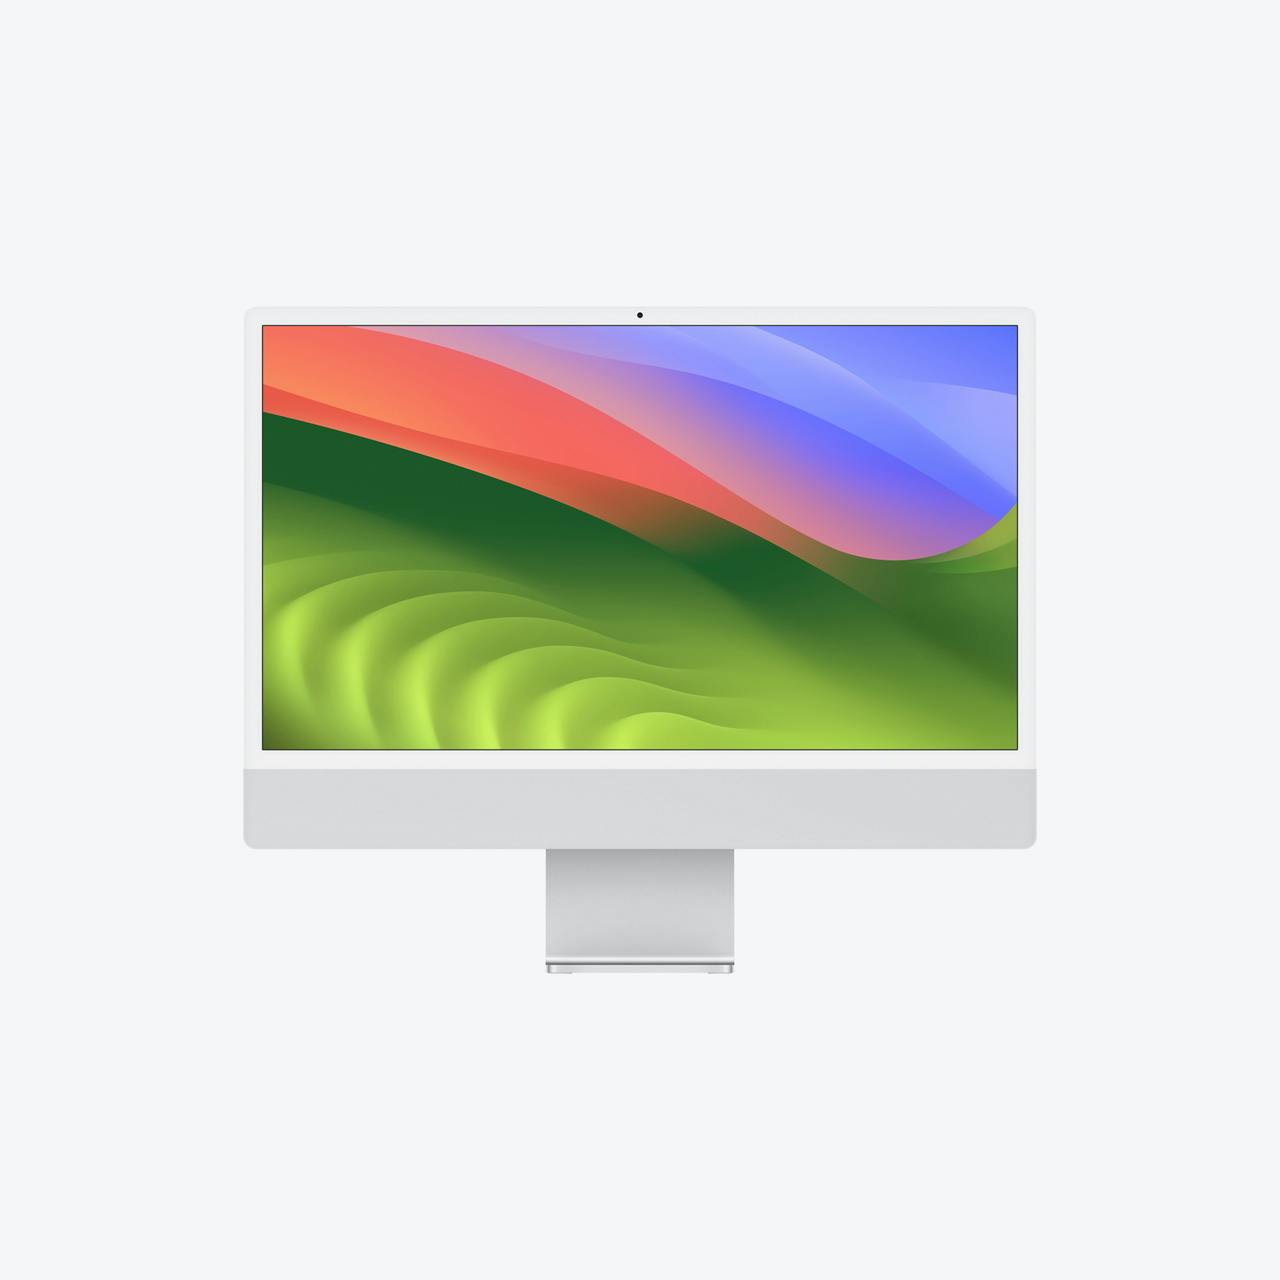 Image of a iMac